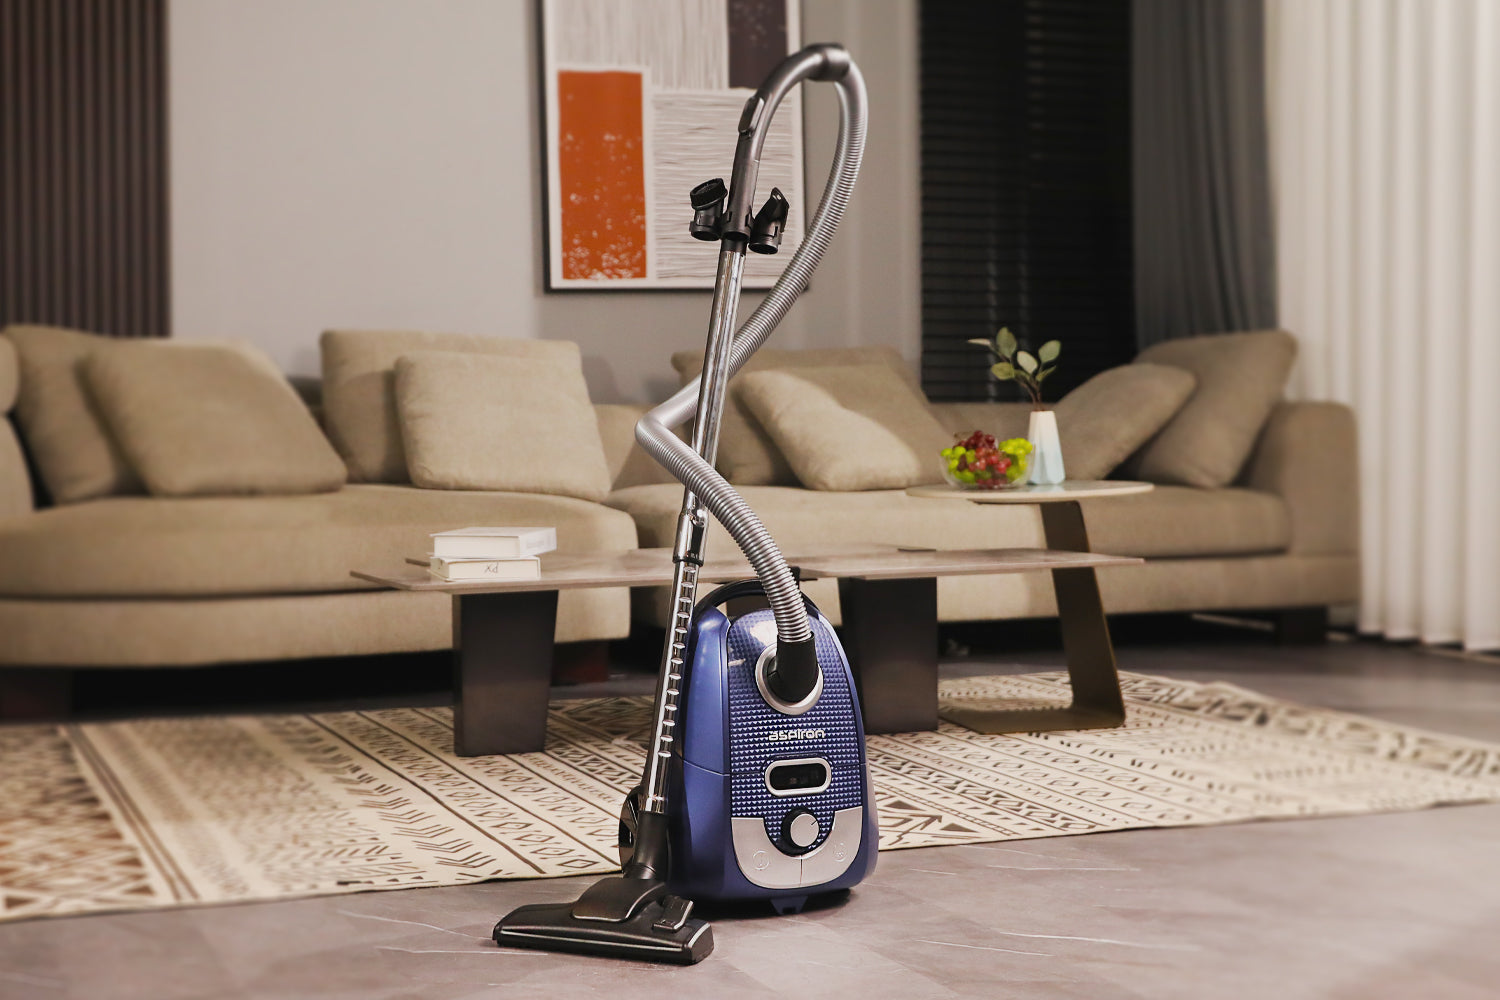 How often should we run the vacuum cleaner each week?